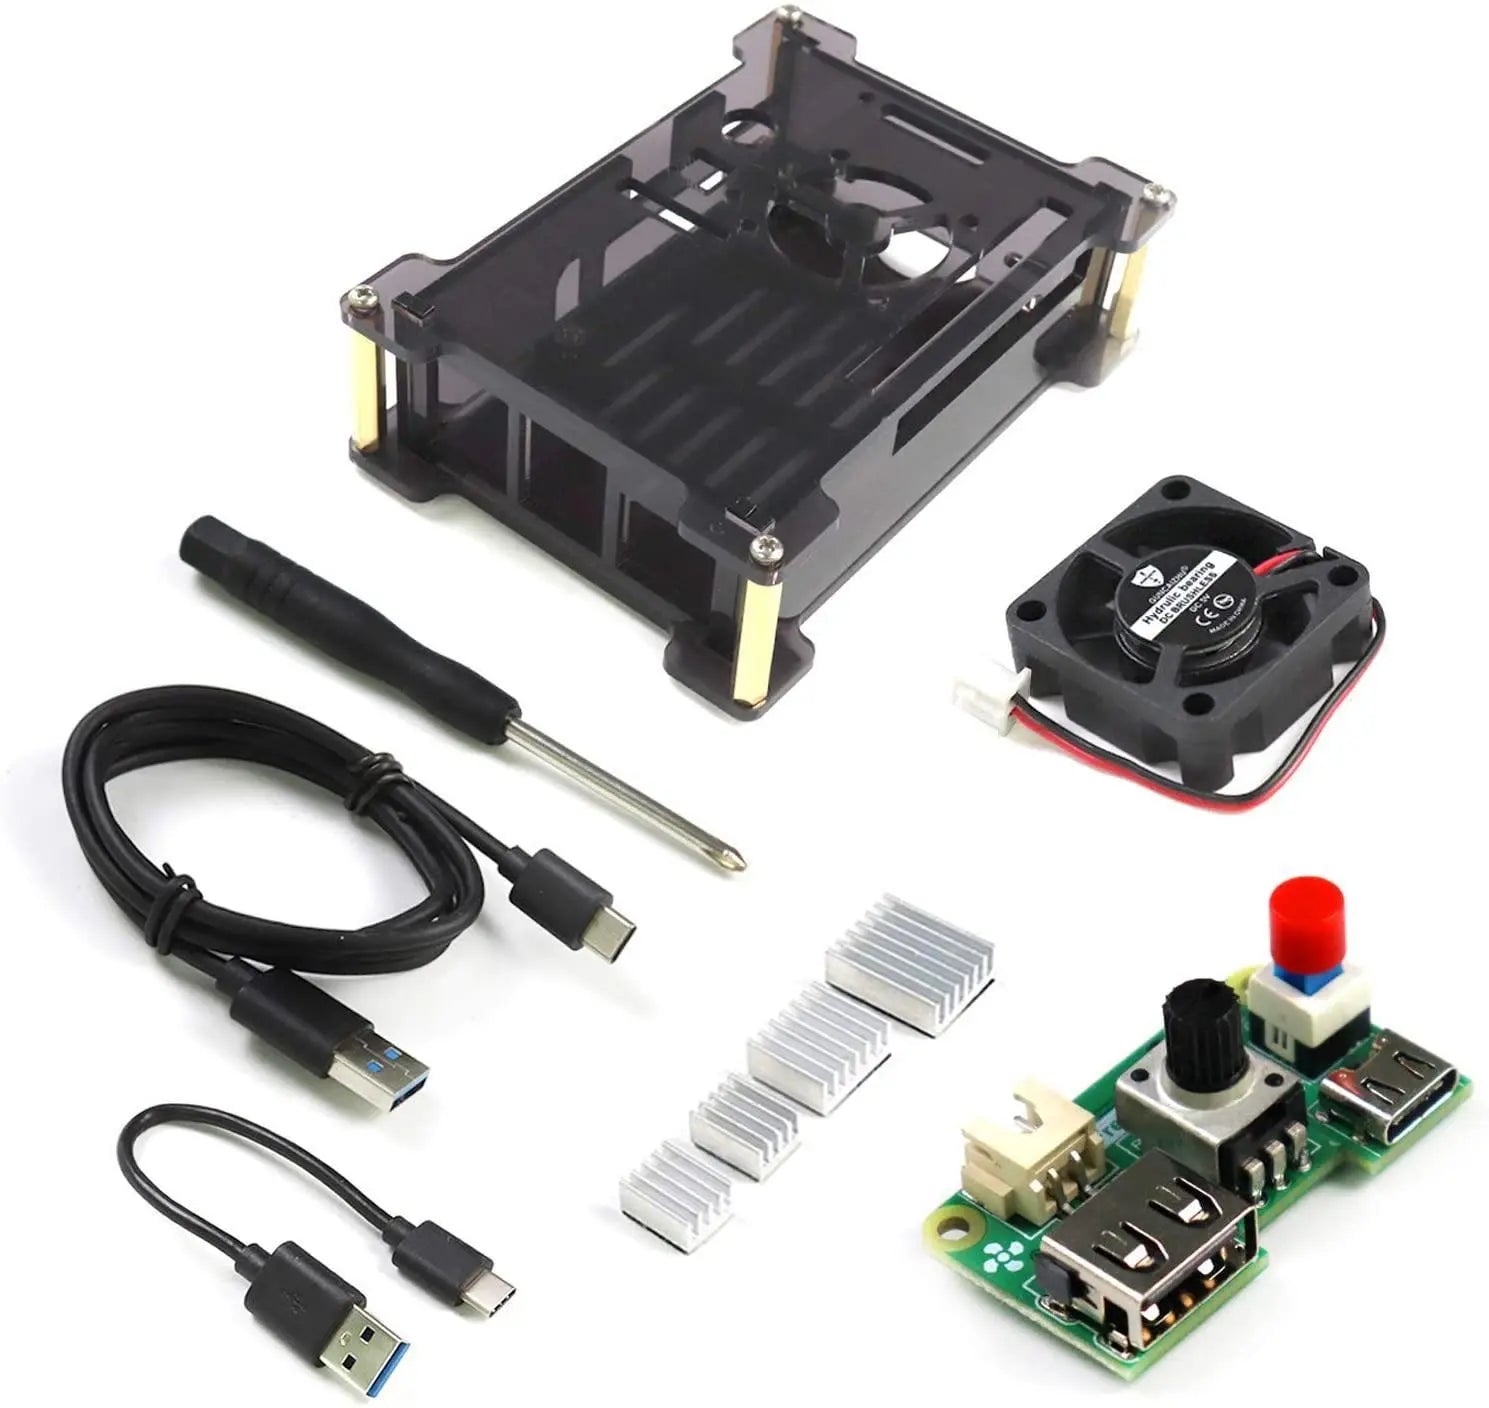 Gehäuse Kit für Raspberry Pi 4 B mit einstellbarem Lüfter, Netzschalter, Acryl-Schutzhülle, USB-Kabel